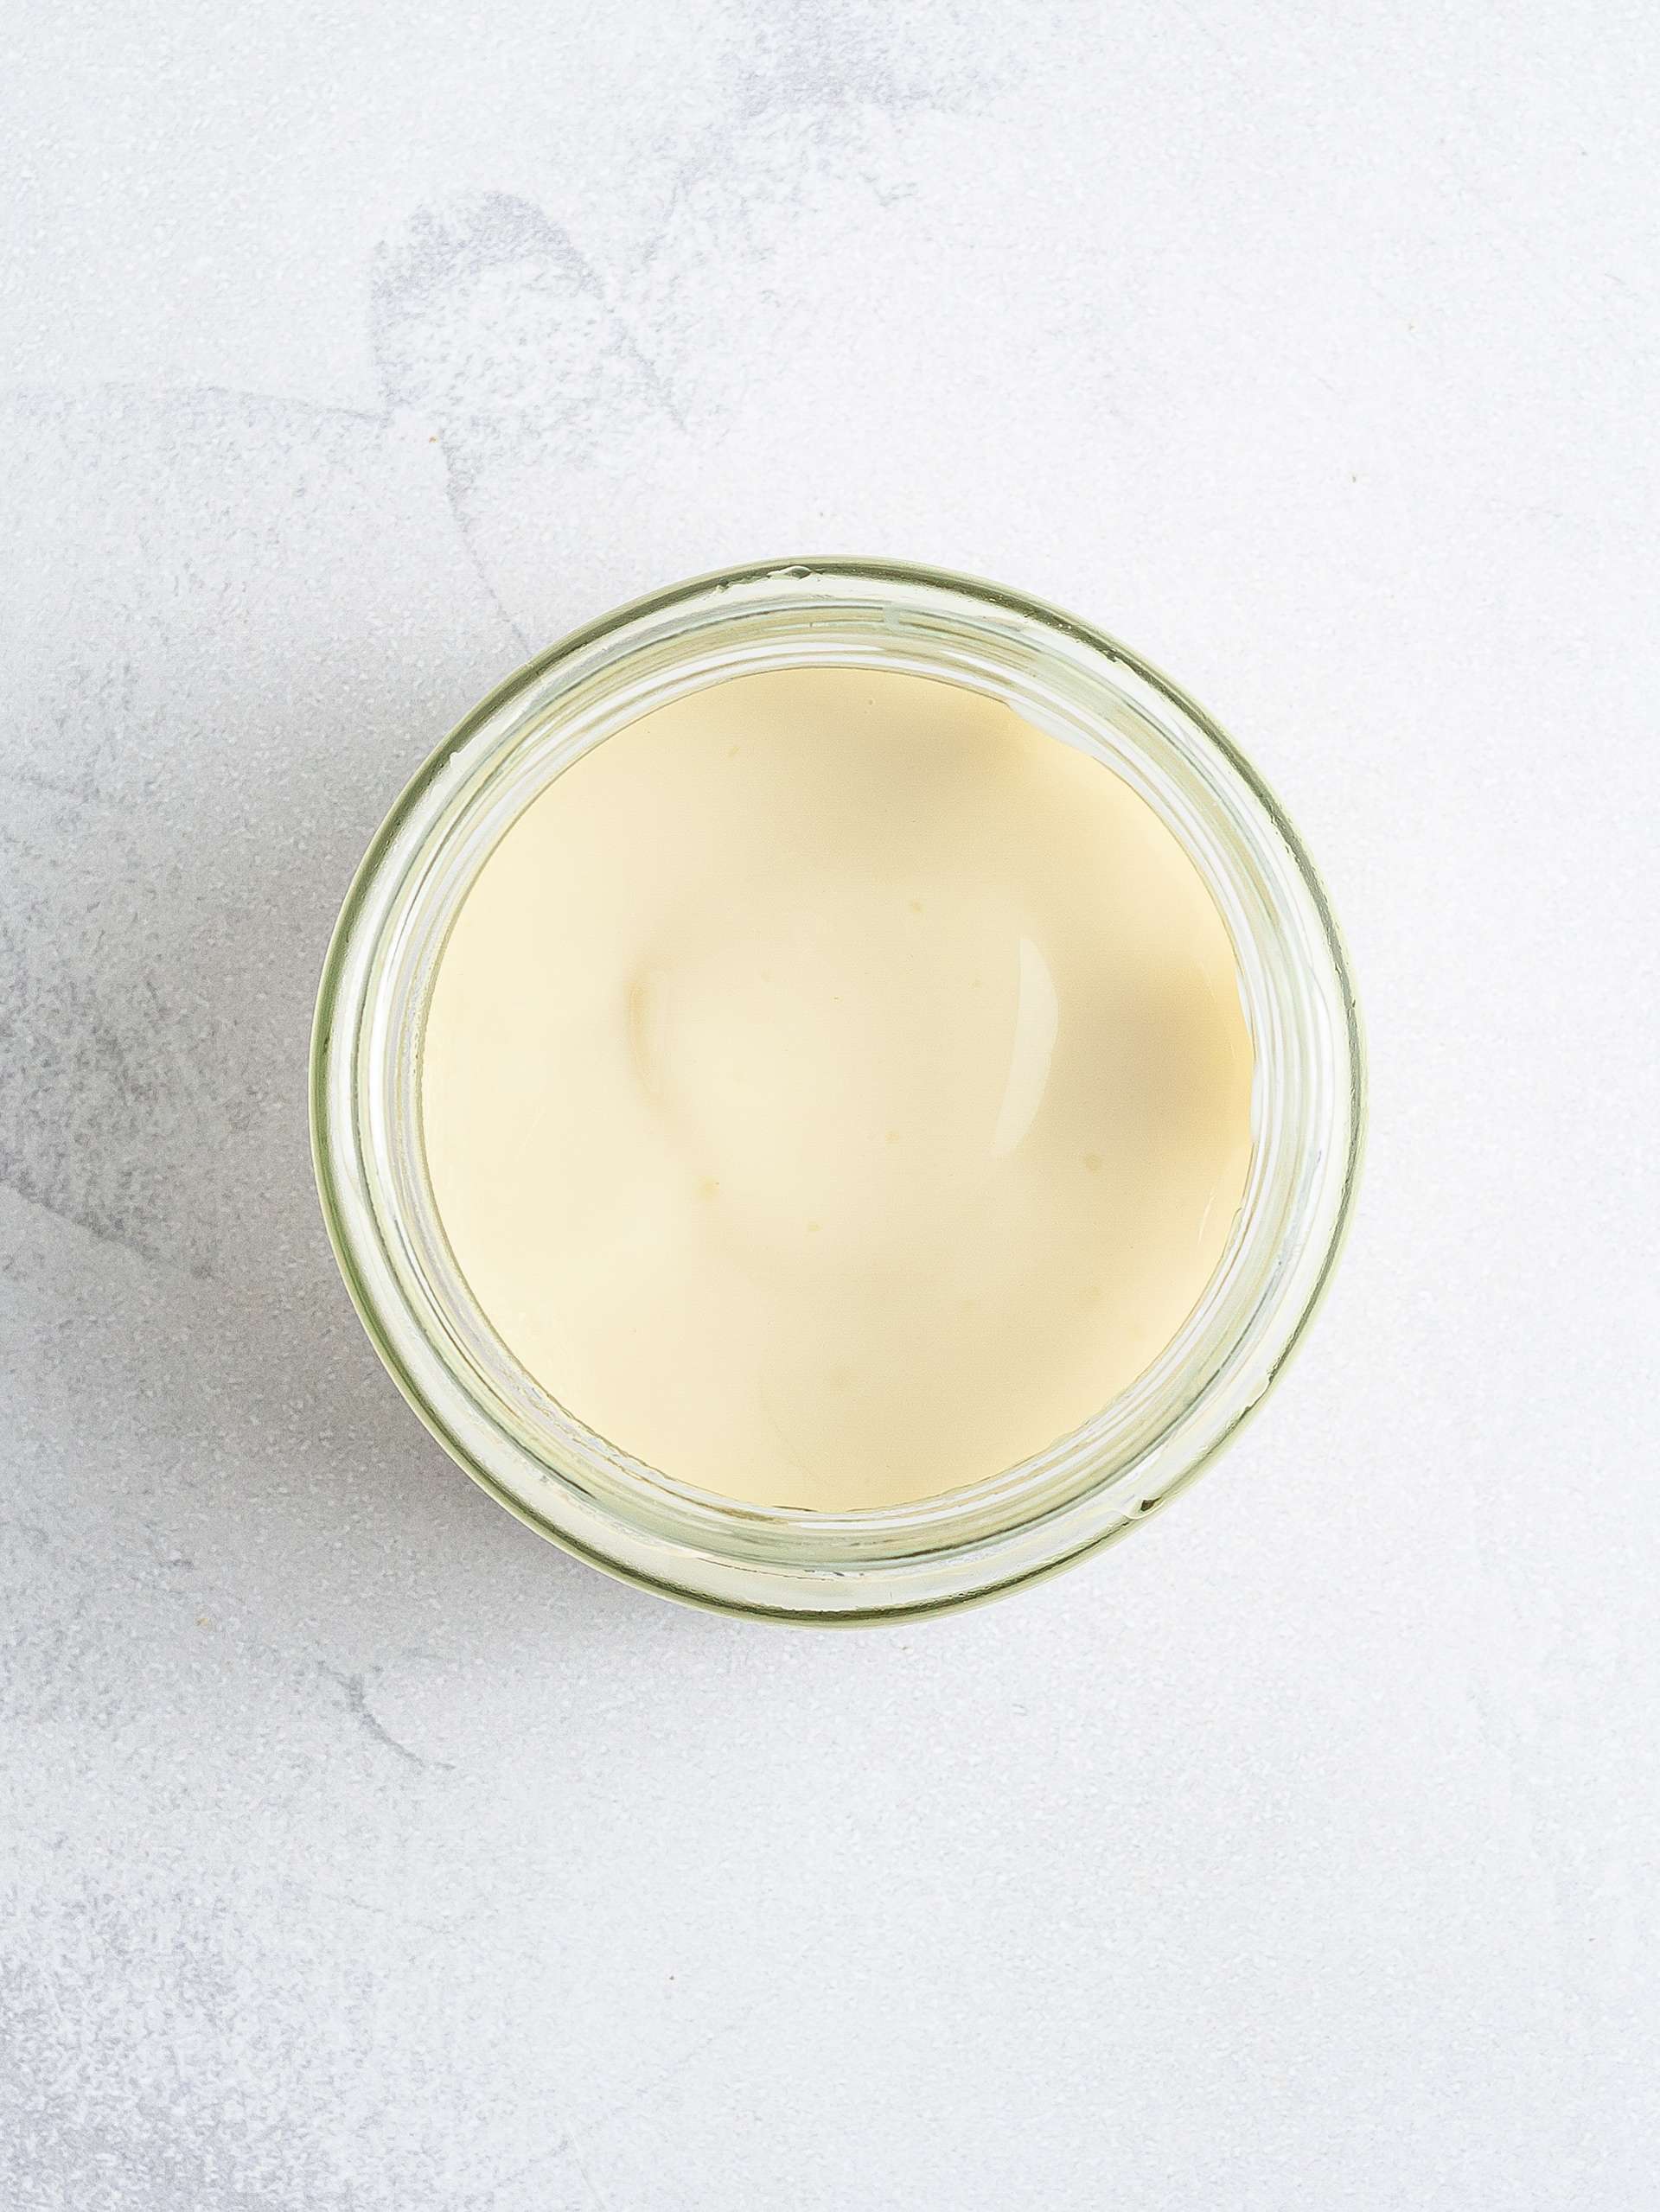 Thickened oat milk yogurt in a jar